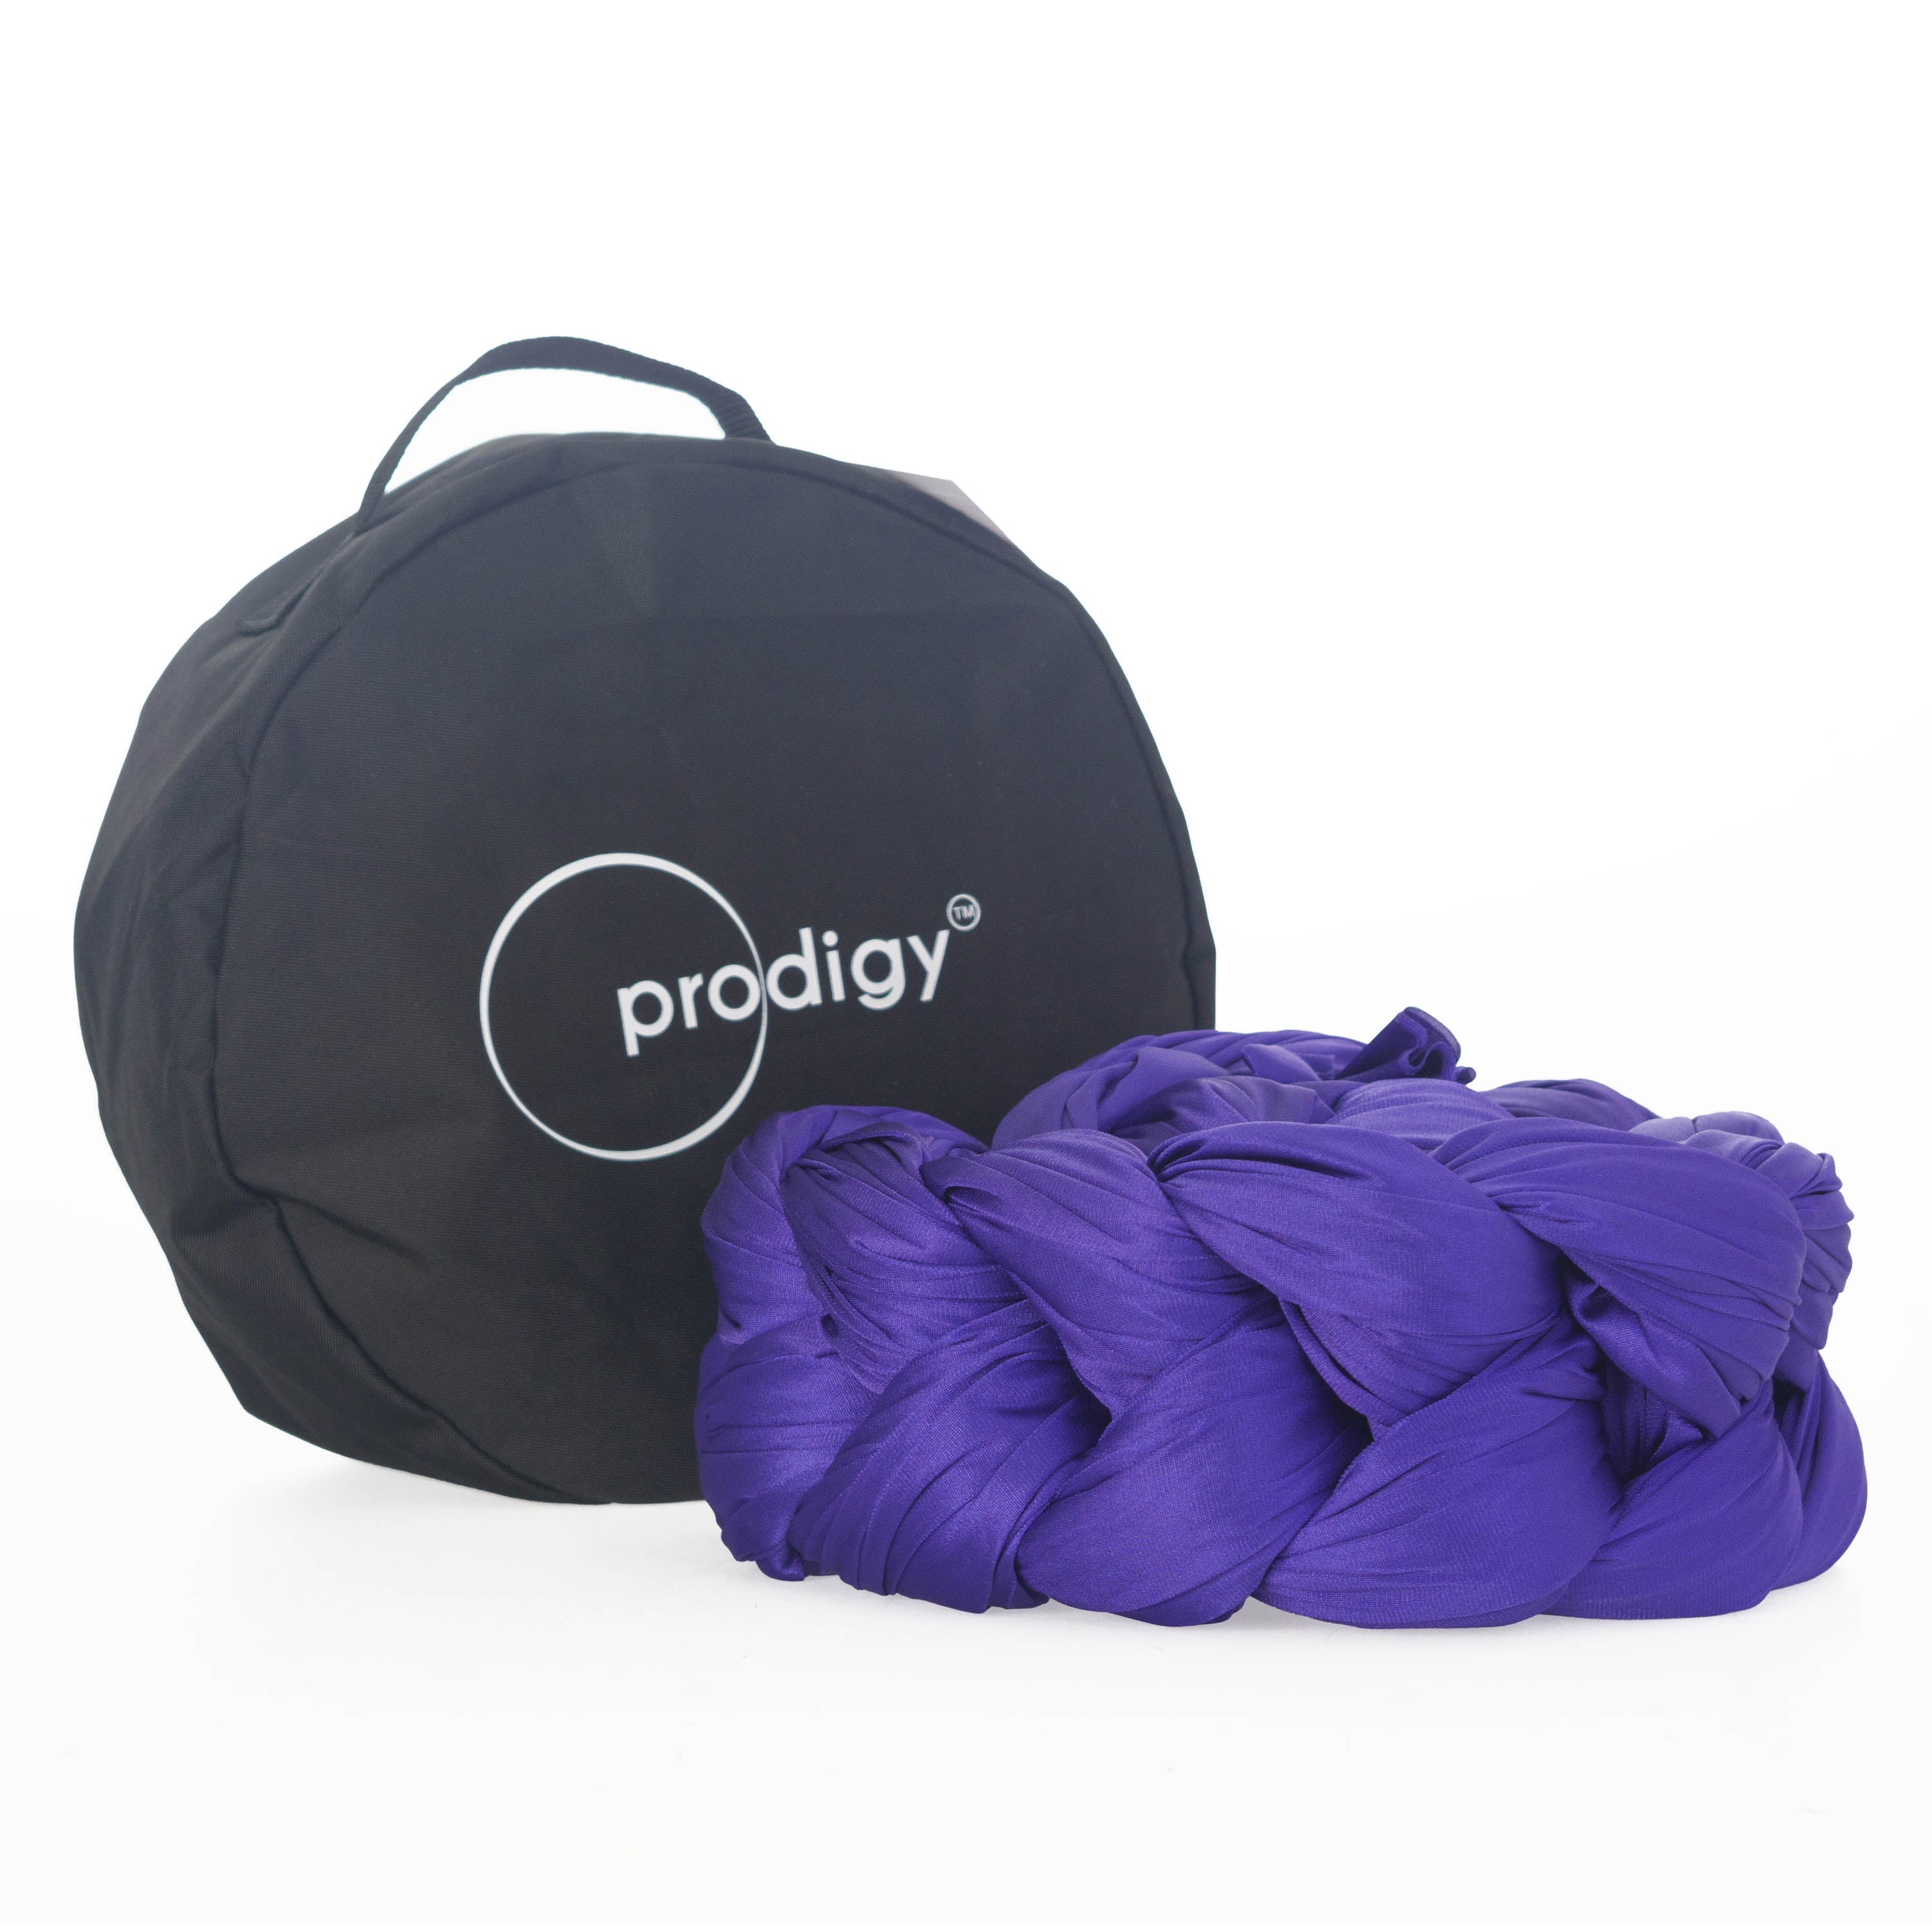 Purple Prodigy hammock tied next to bag